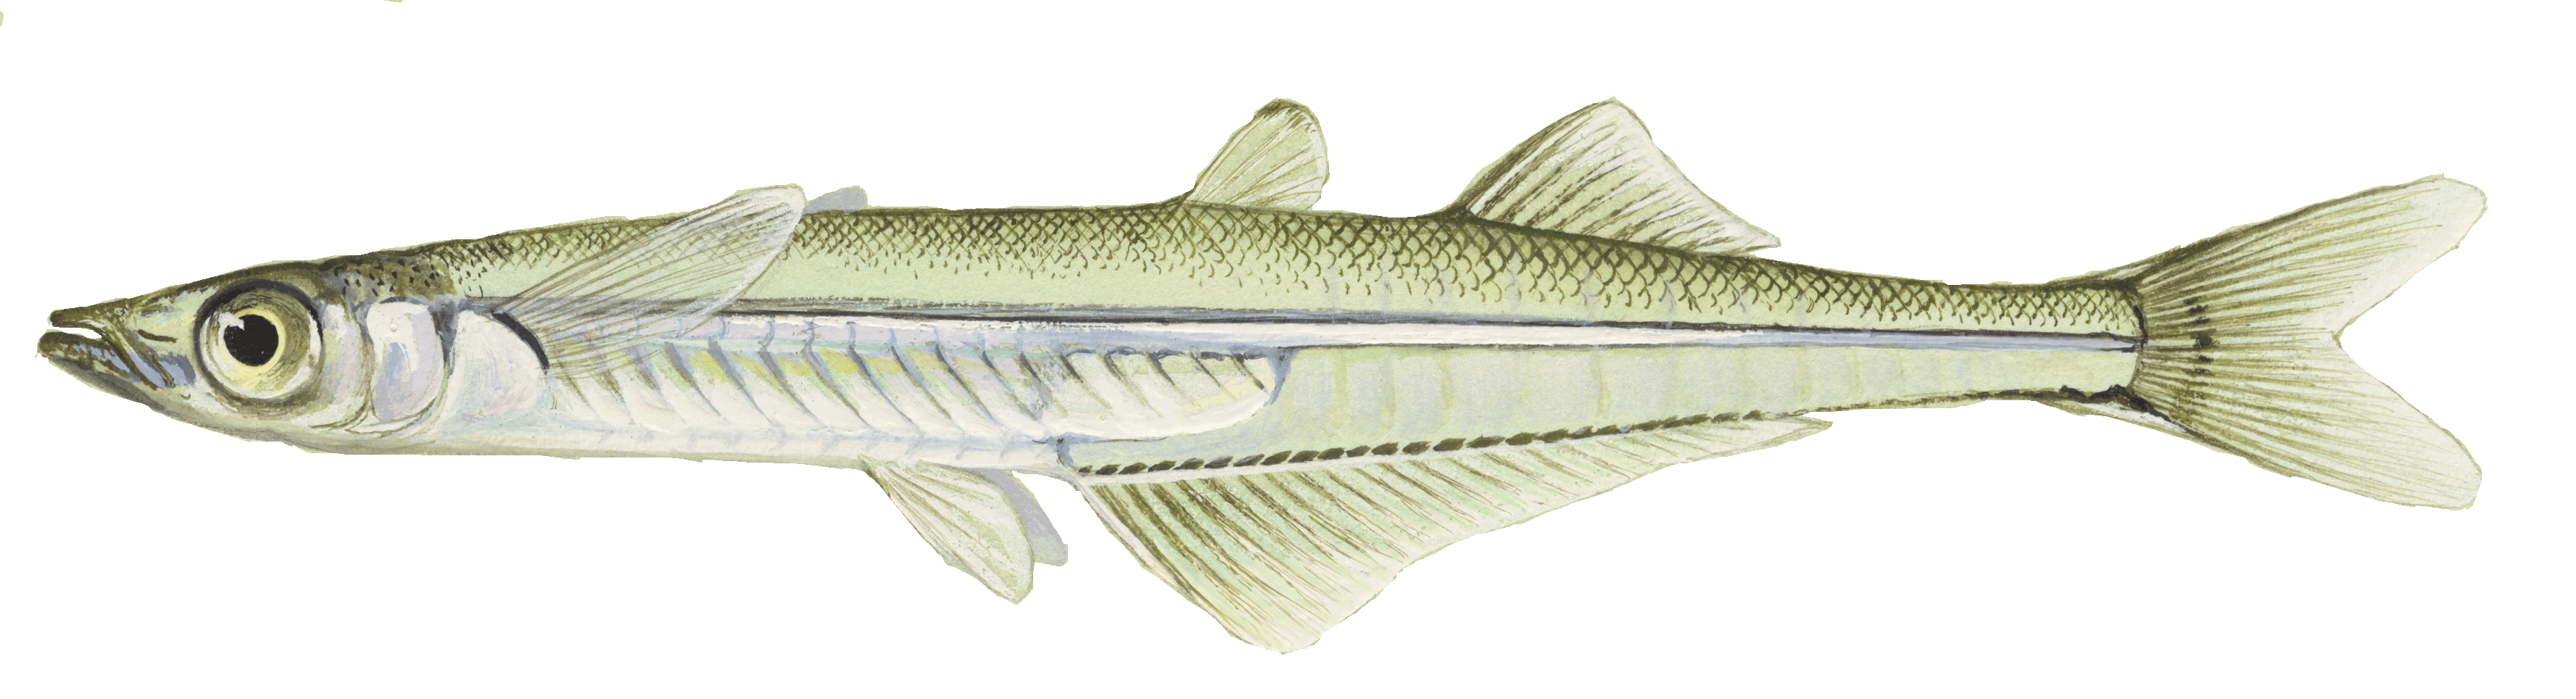 Brook Silverside, illustration by Maynard Reece, from Iowa Fish and Fishing.